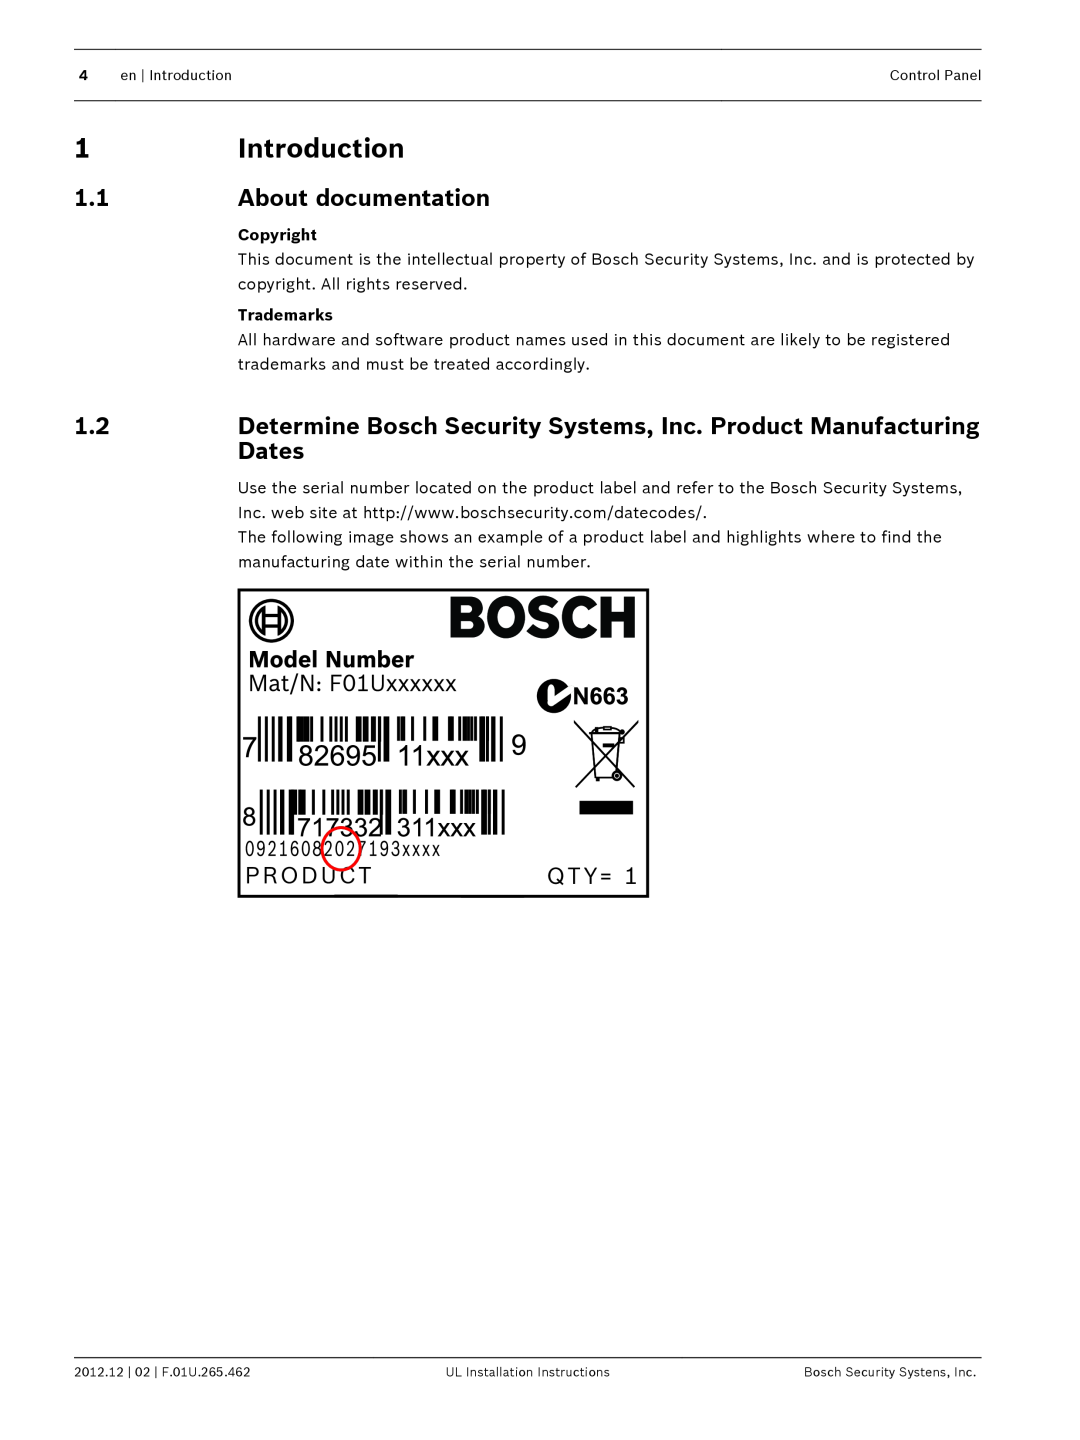 Bosch Appliances D9412GV4 installation instructions Introduction, About documentation, Dates 